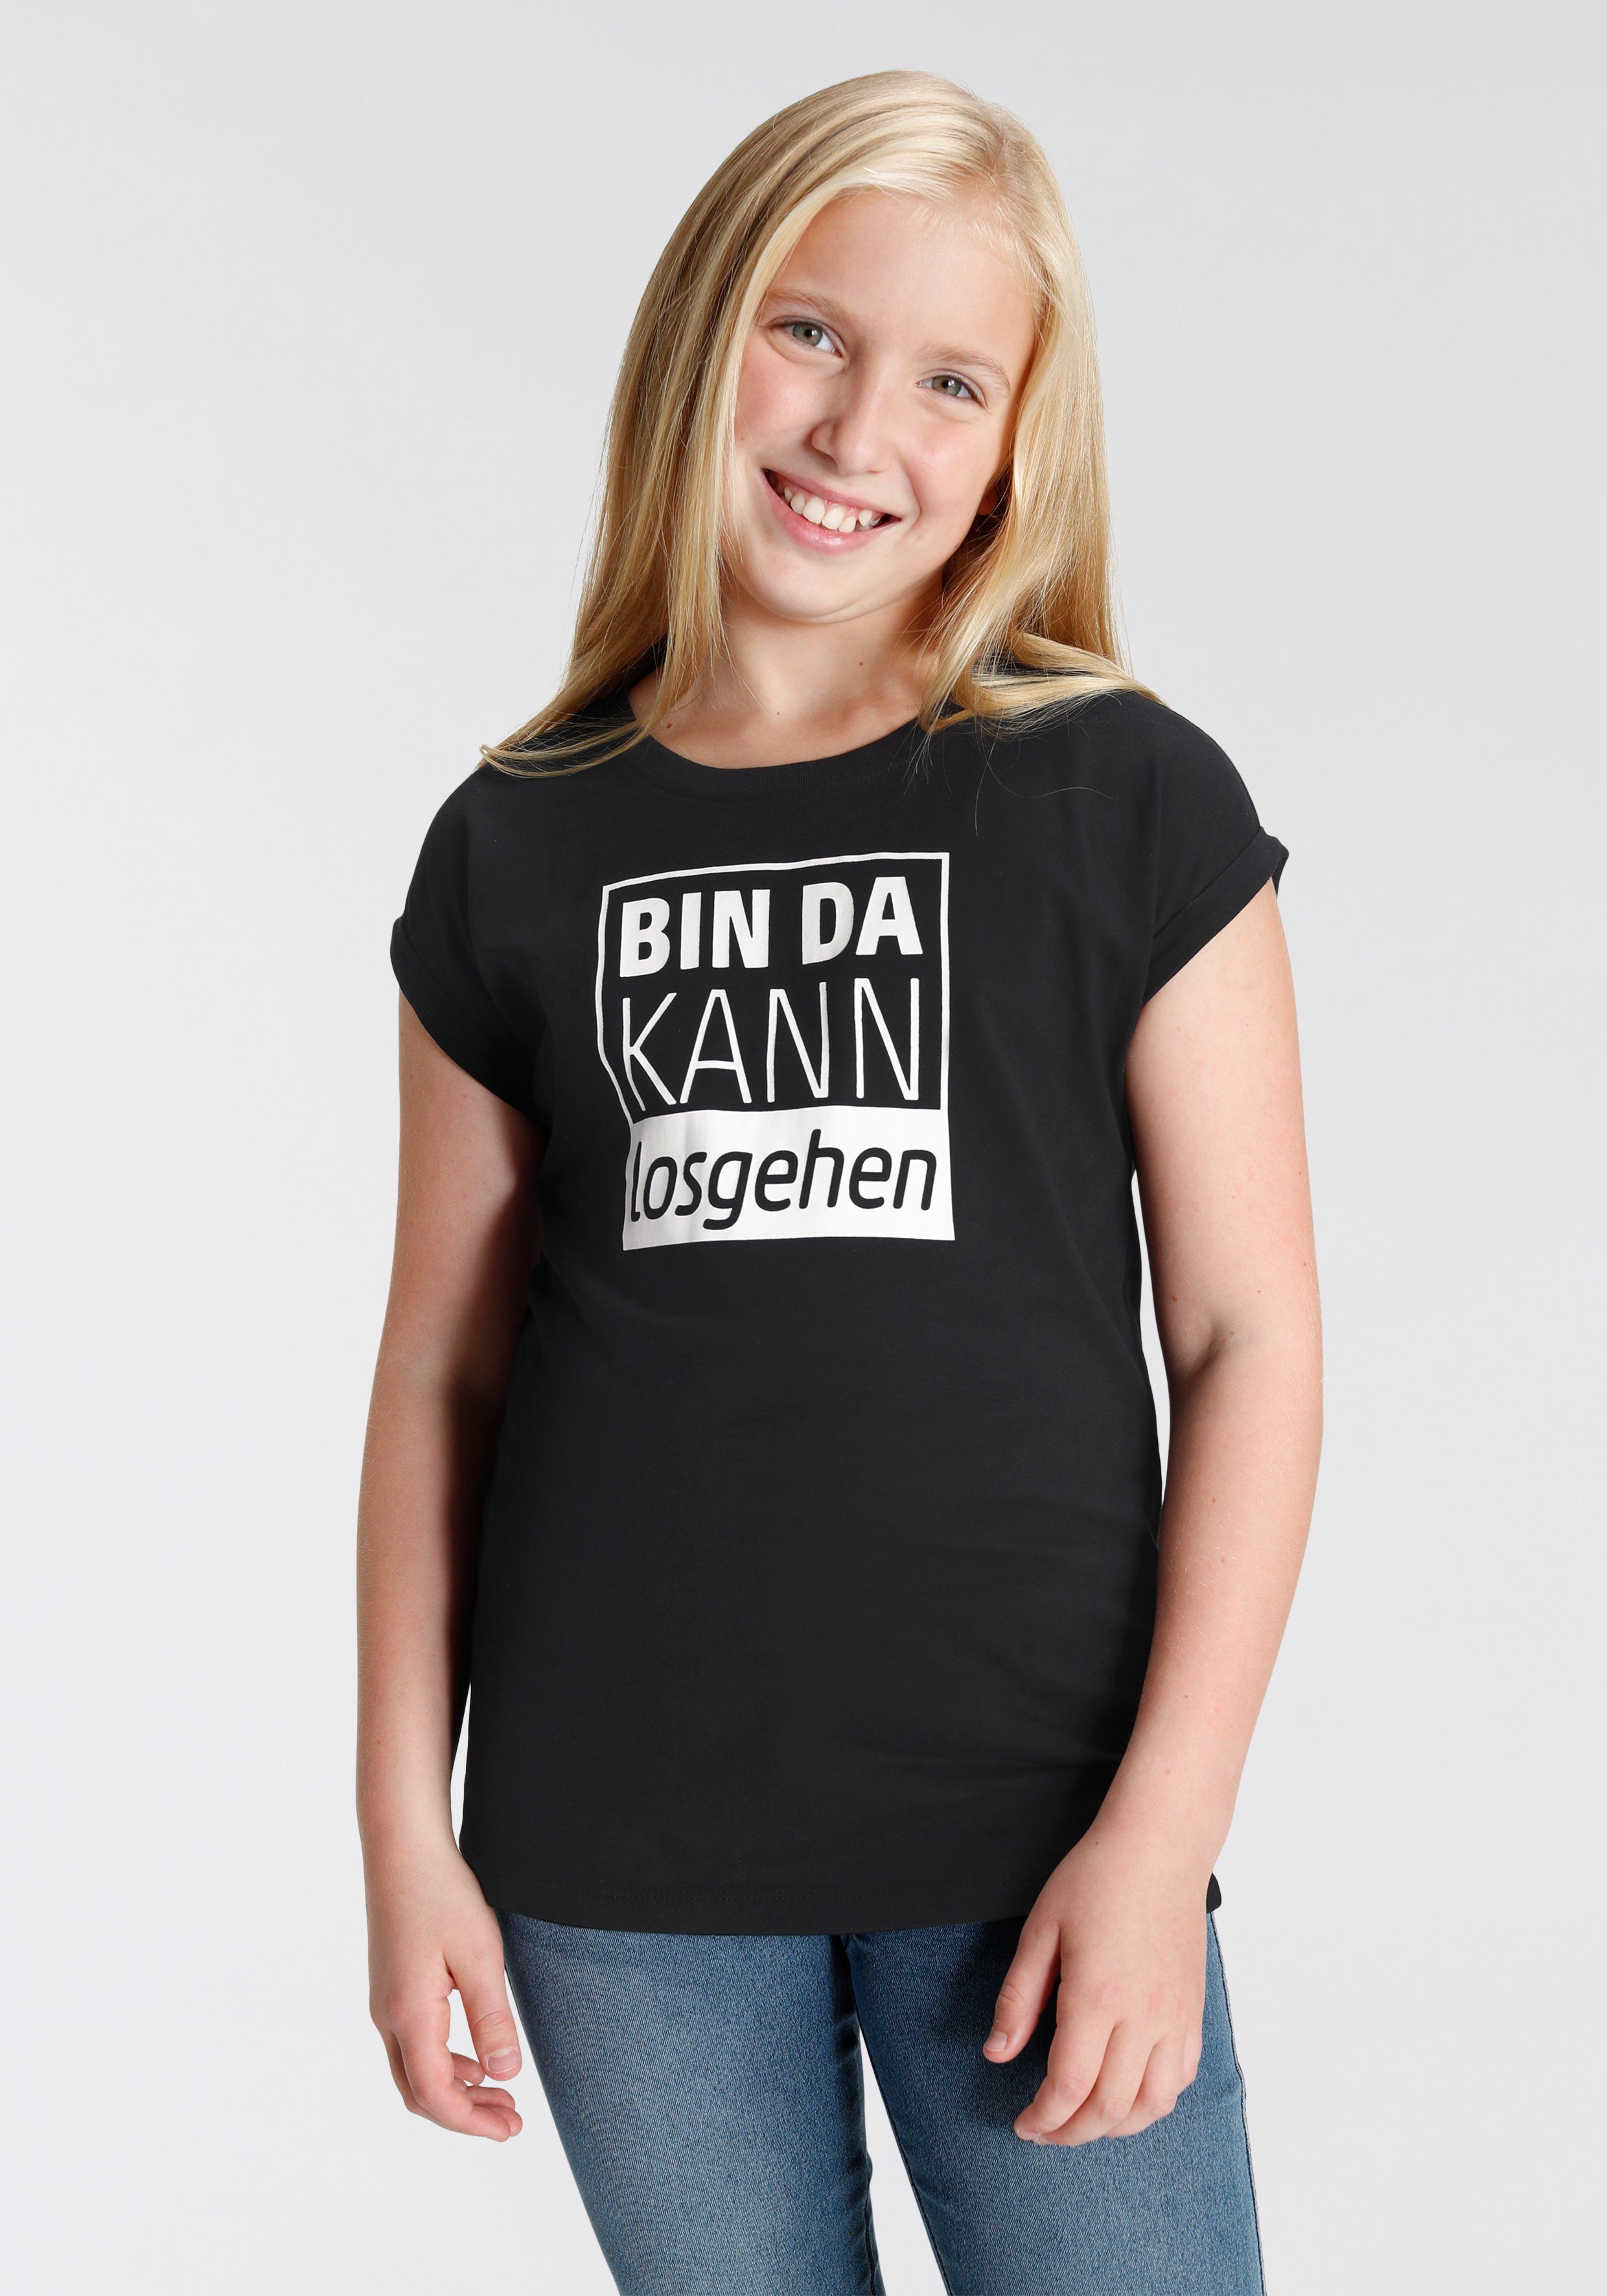 KIDSWORLD T-shirt Bin da kann losgehen | shop wijd, model OTTO casual online